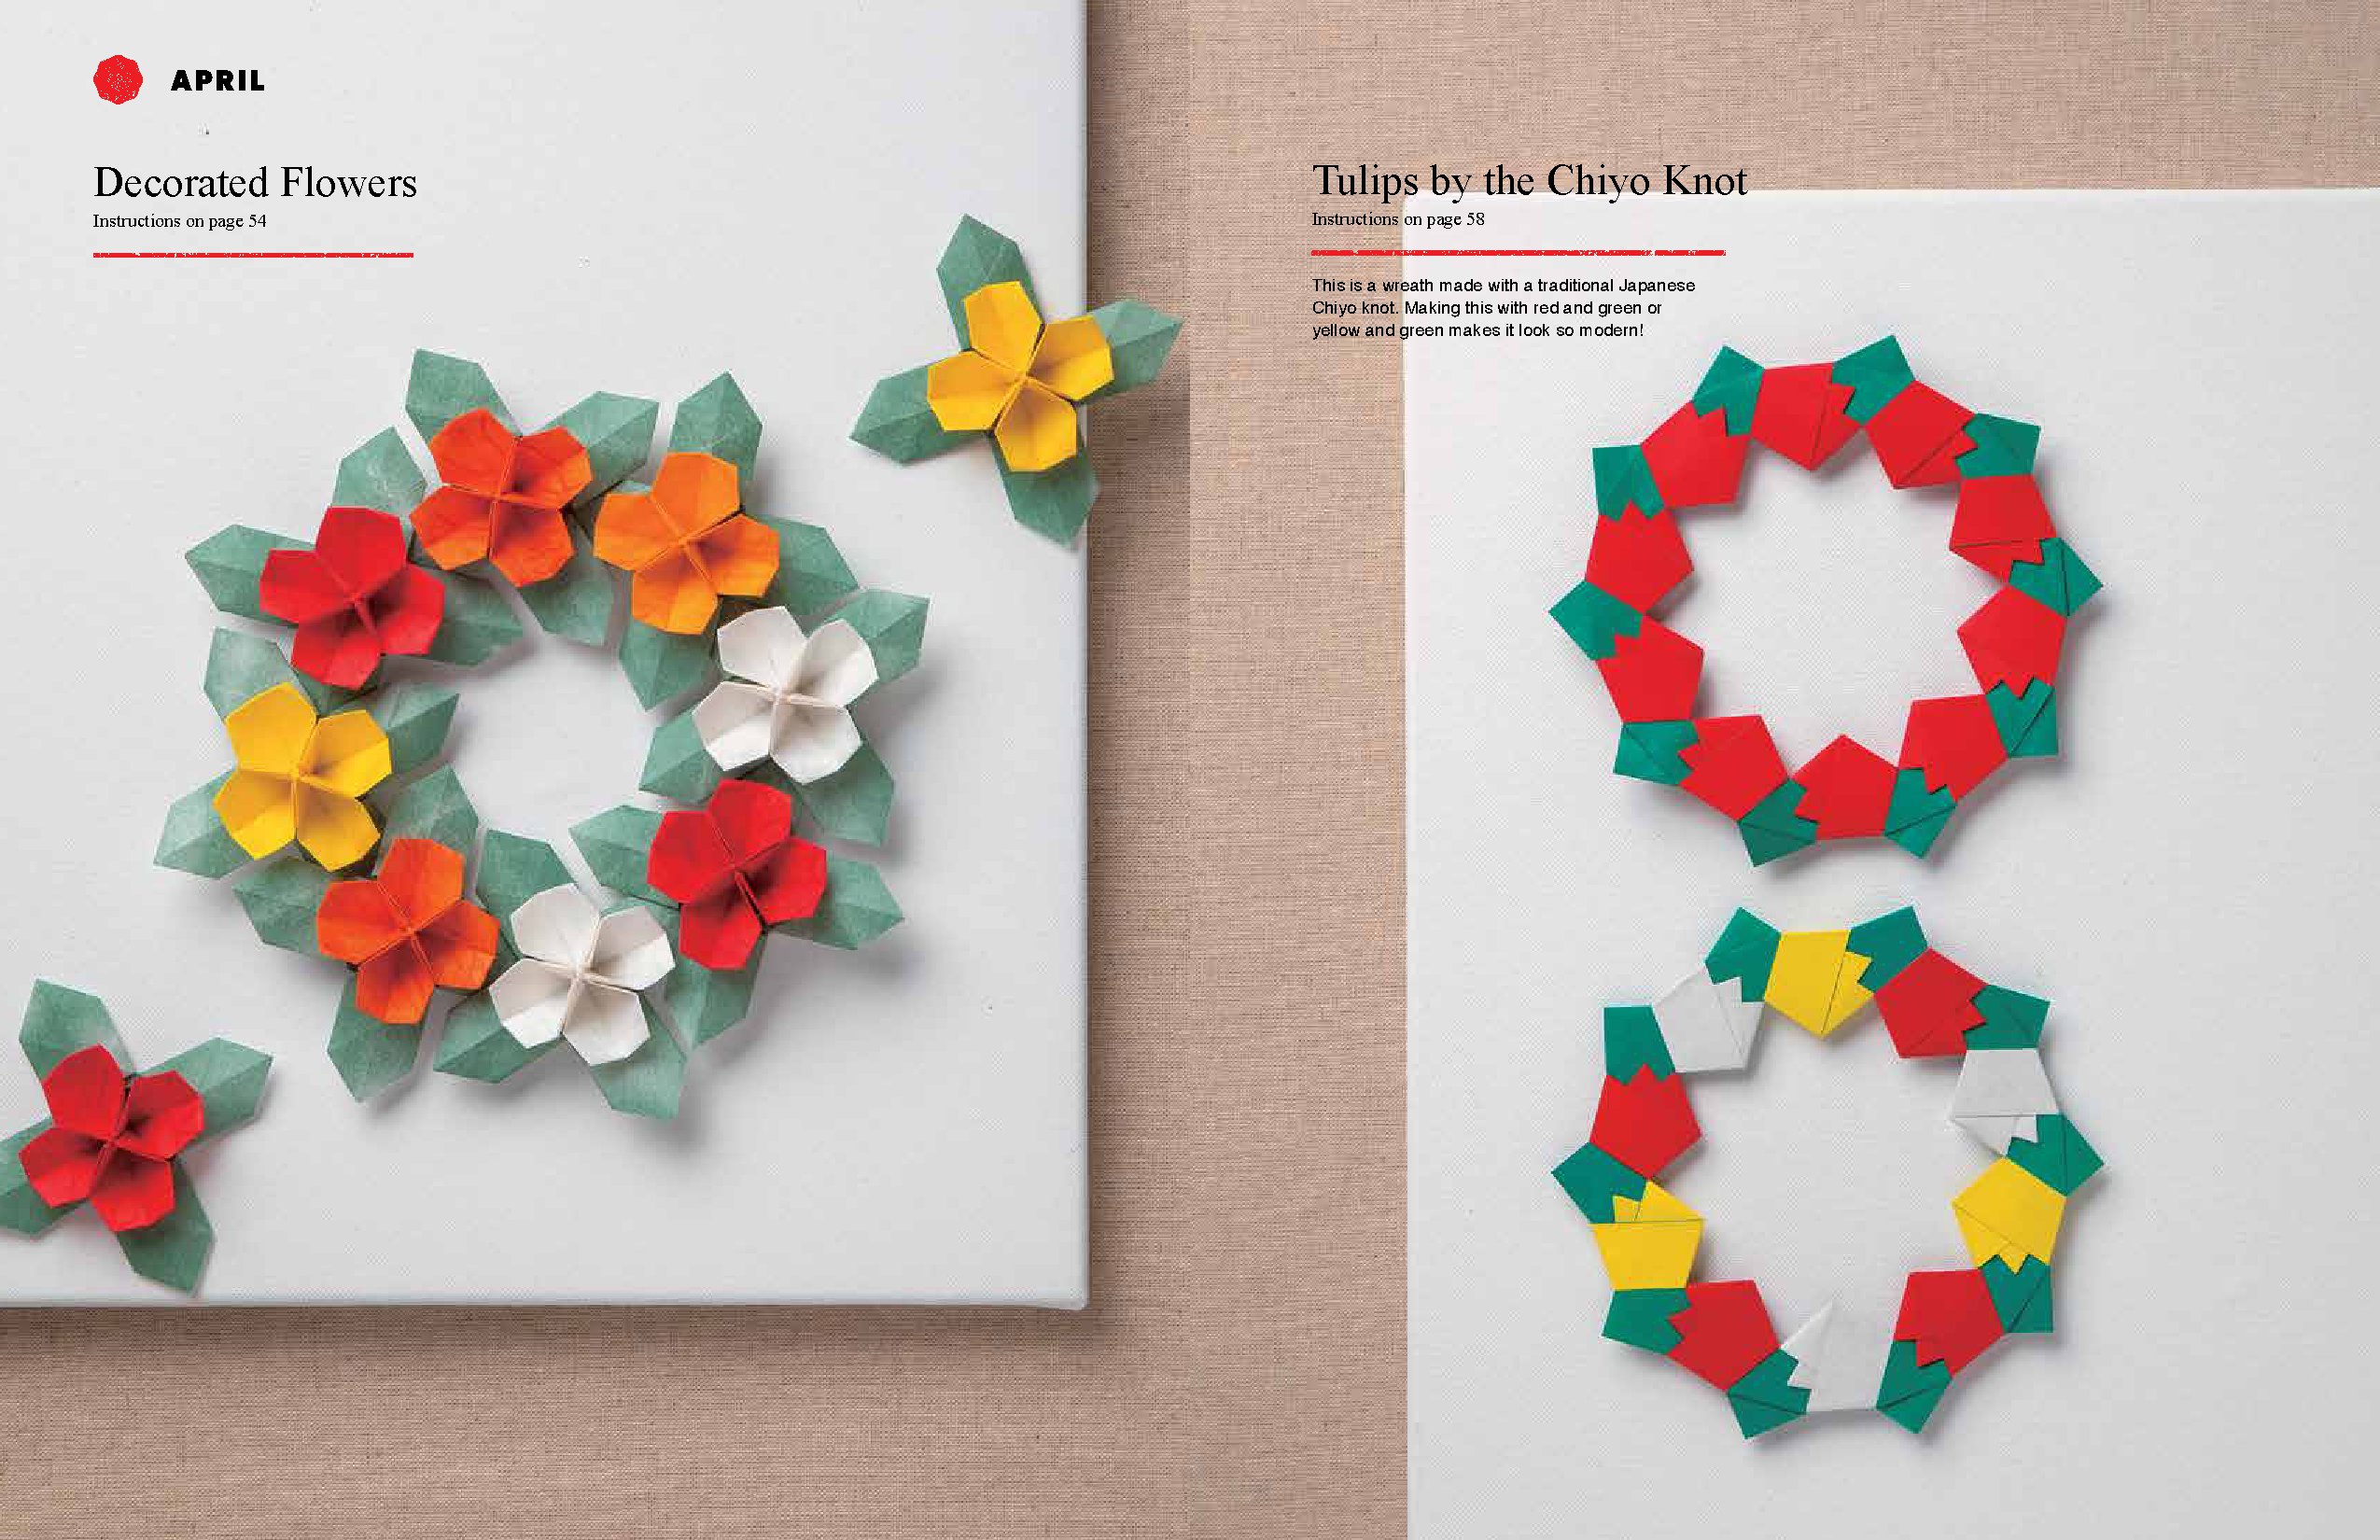 Beautiful Origami Paper Wreaths